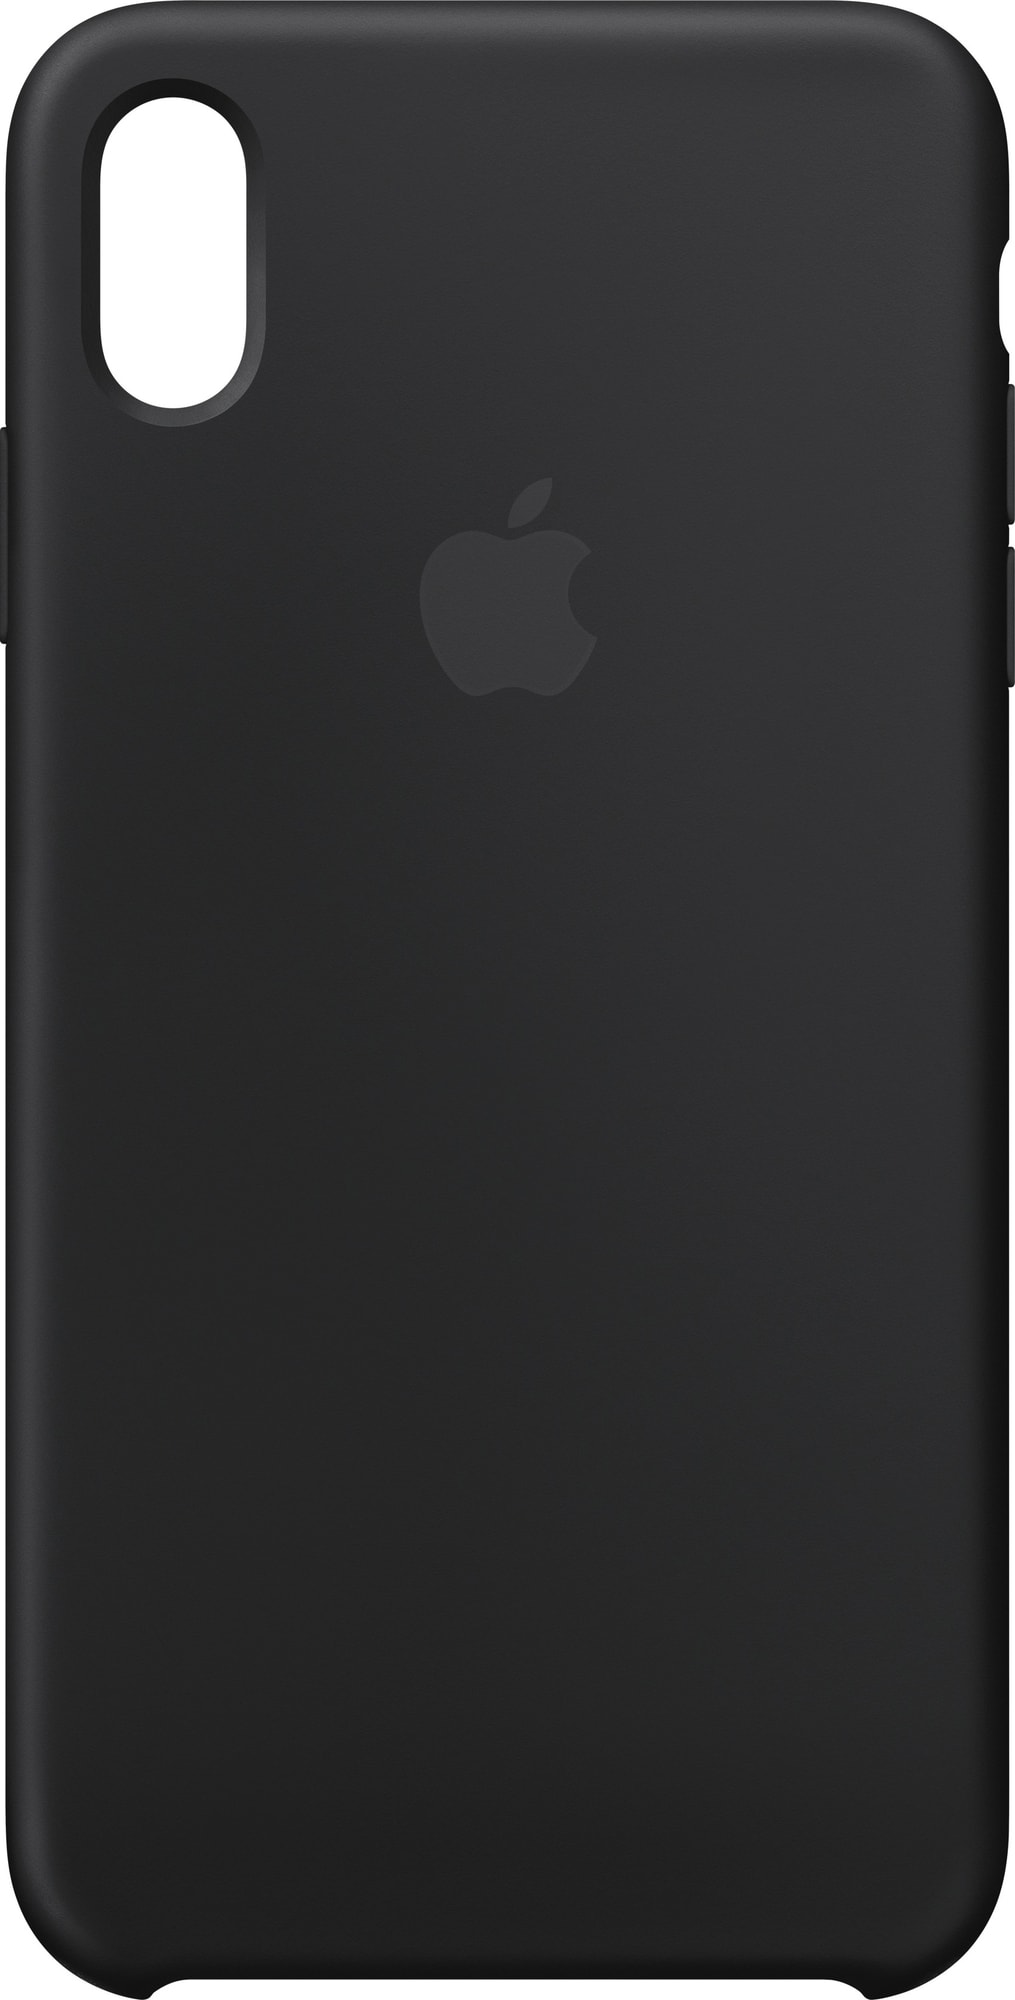 iPhone Xs Max silikonfodral (svart) - Skal och Fodral - Elgiganten